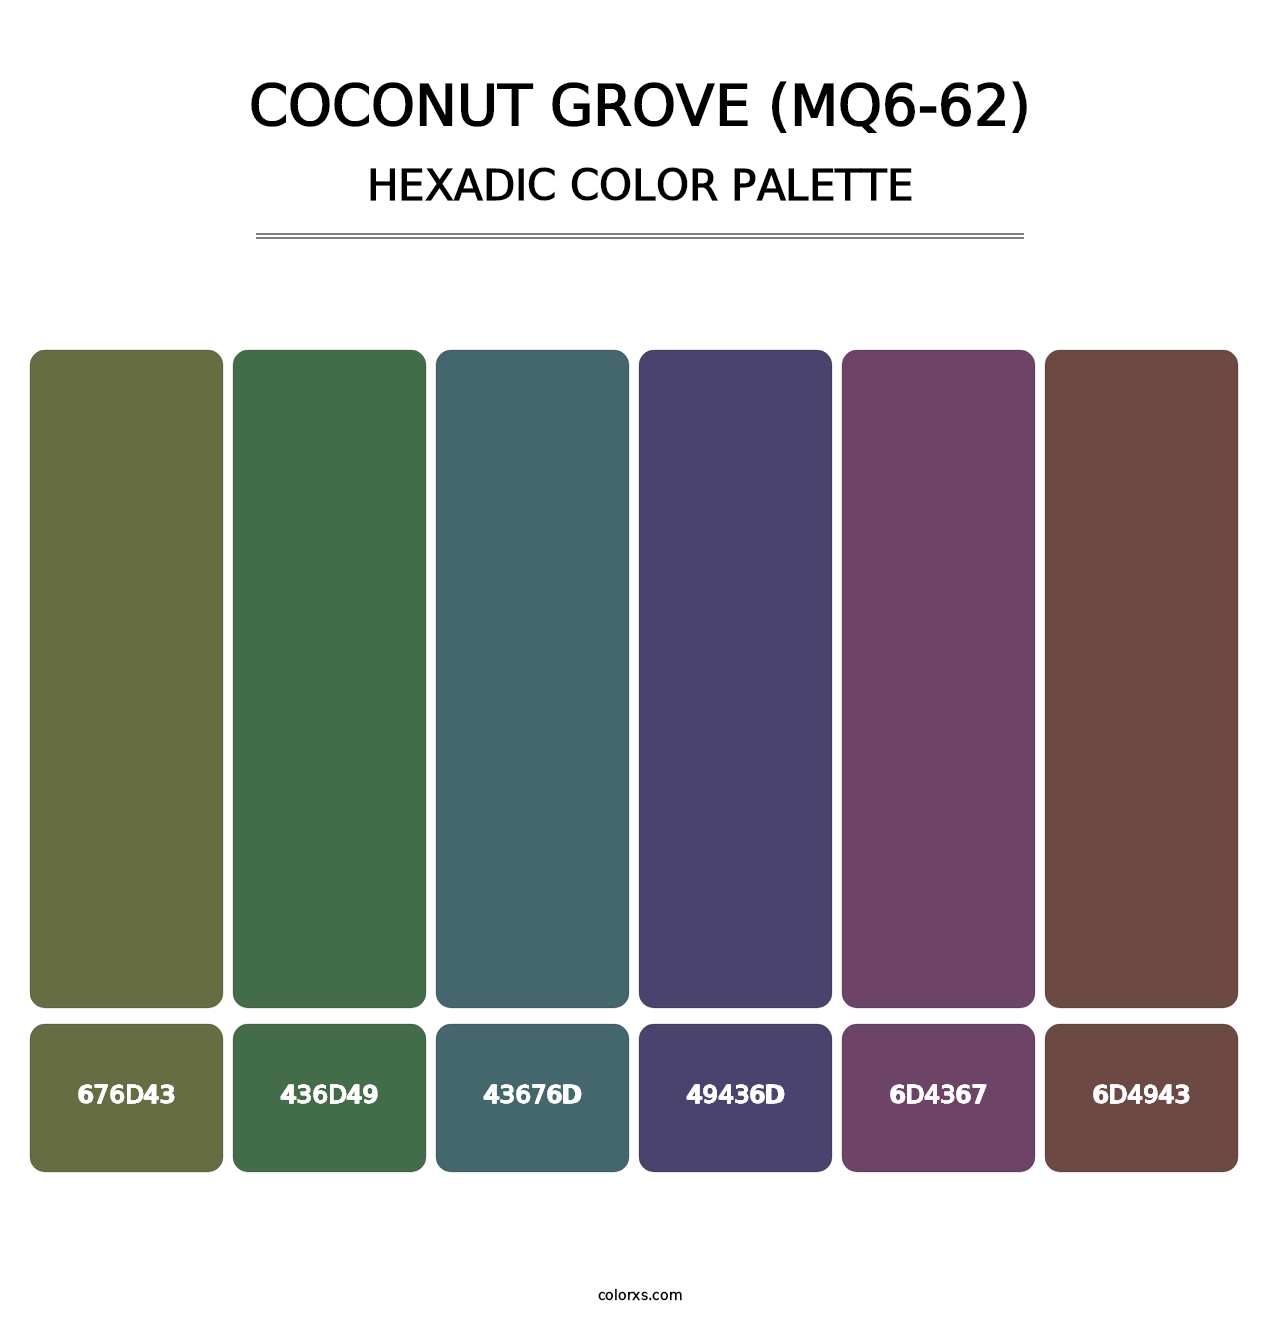 Coconut Grove (MQ6-62) - Hexadic Color Palette